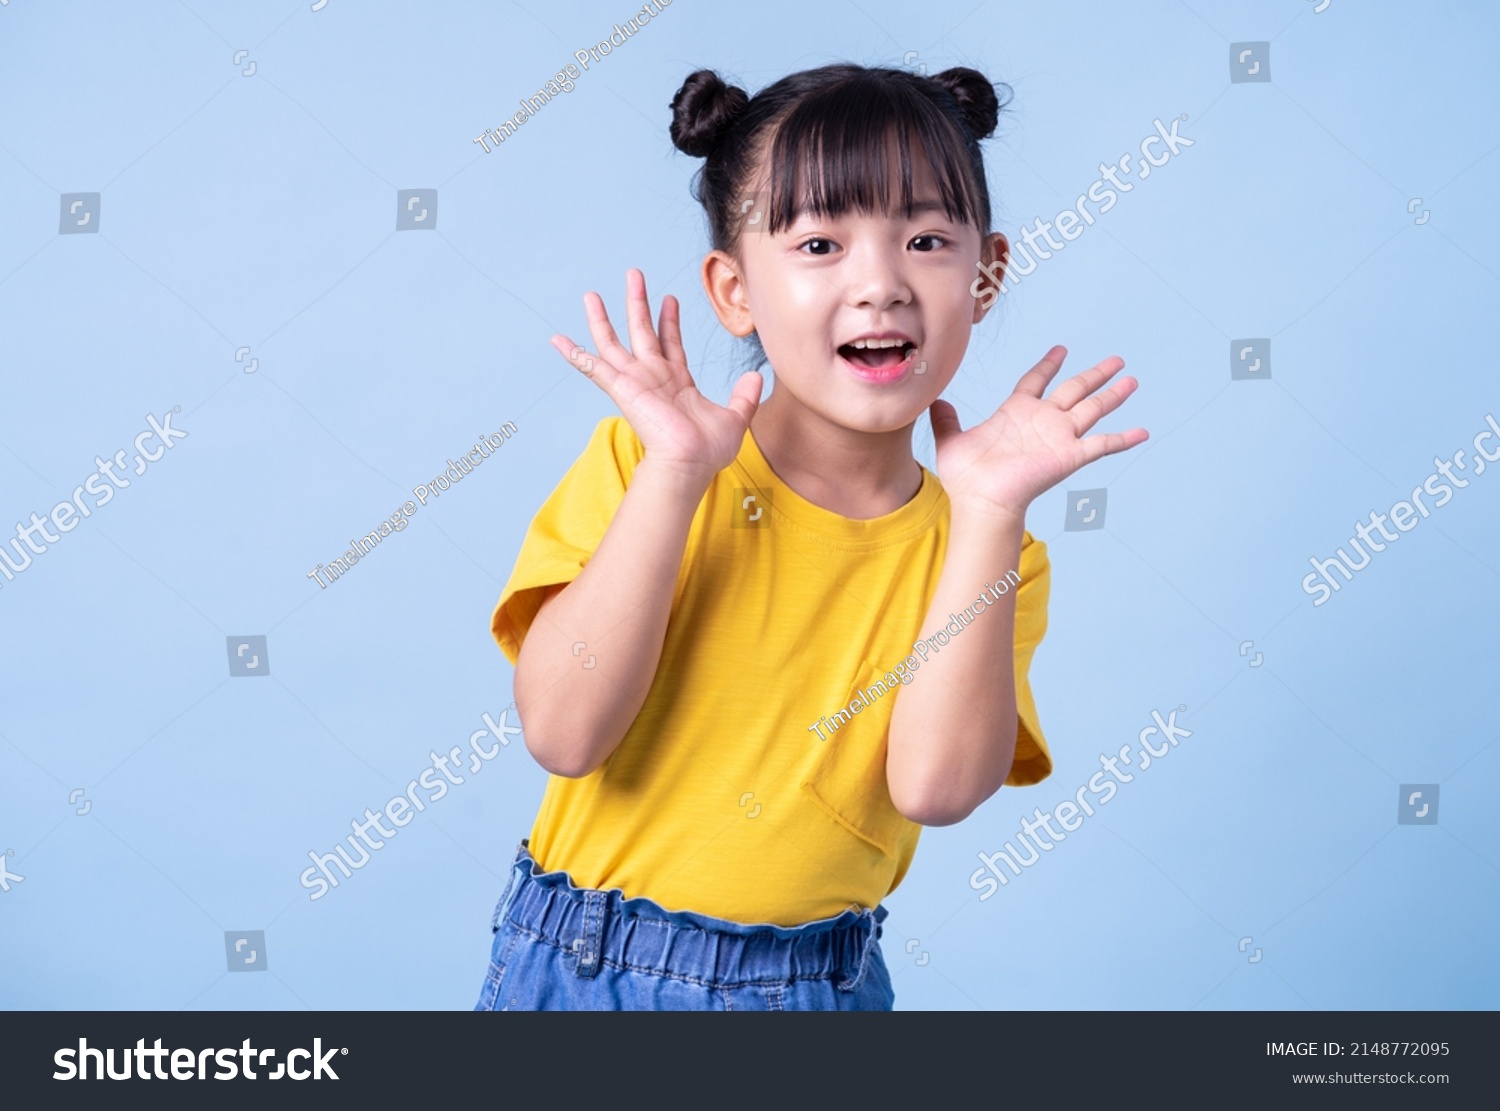 Image of Asian child posing on blue background #2148772095